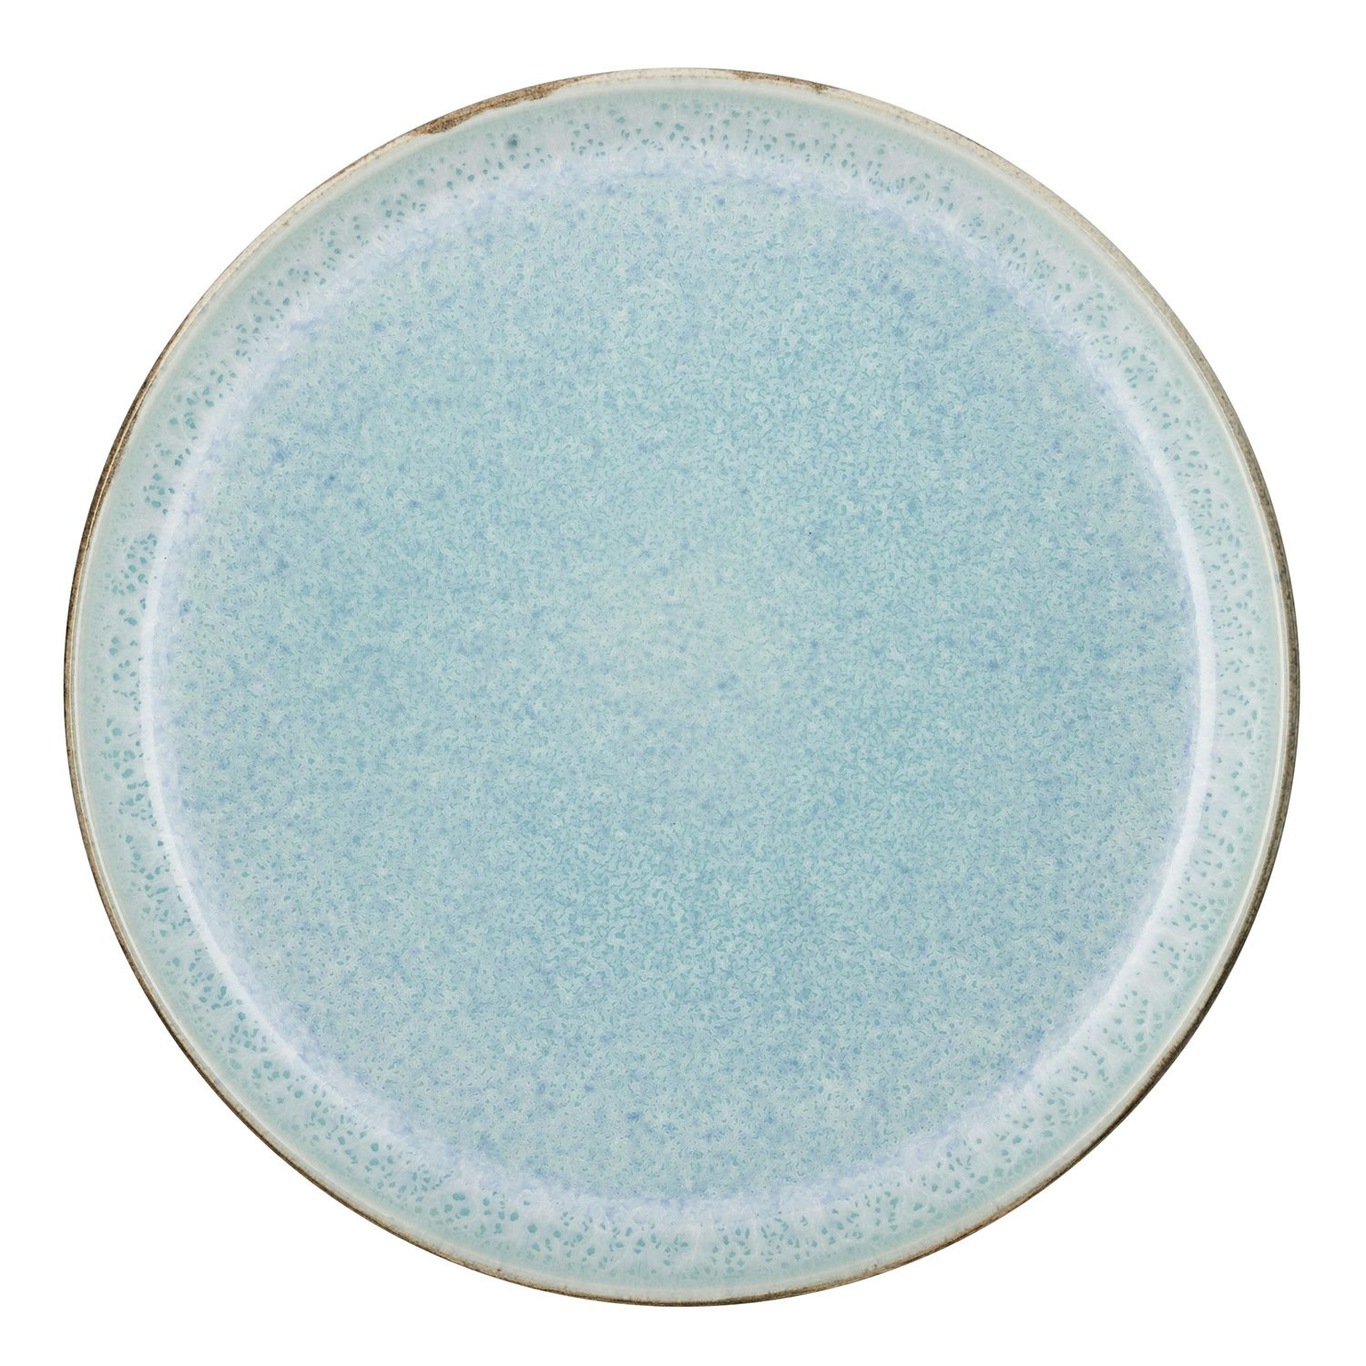 Bitz Gastro Plate Ø21cm, Grey/Light Blue